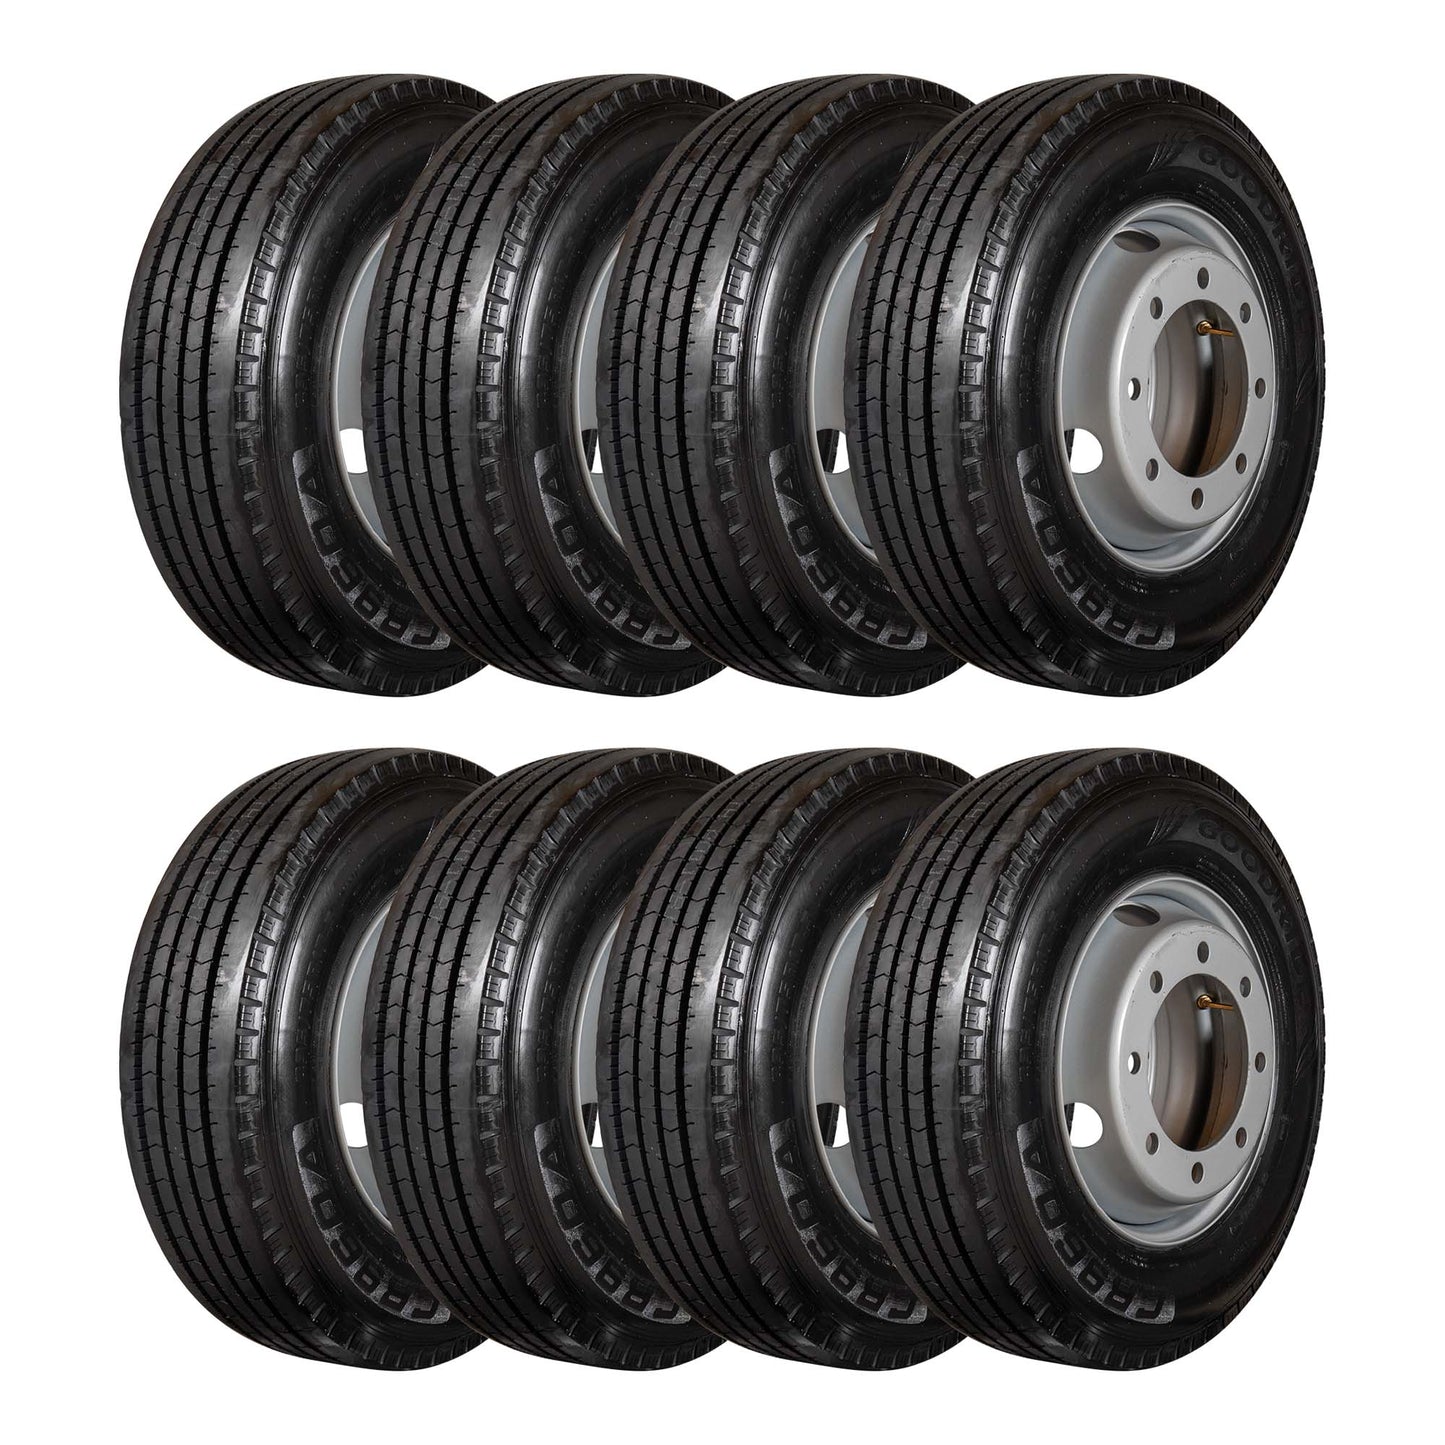 Goodride 17.5" 18 ply Radial Trailer Tire & Wheel - ST 235/75R17.5 8x275mm Lug (Silver Dual)